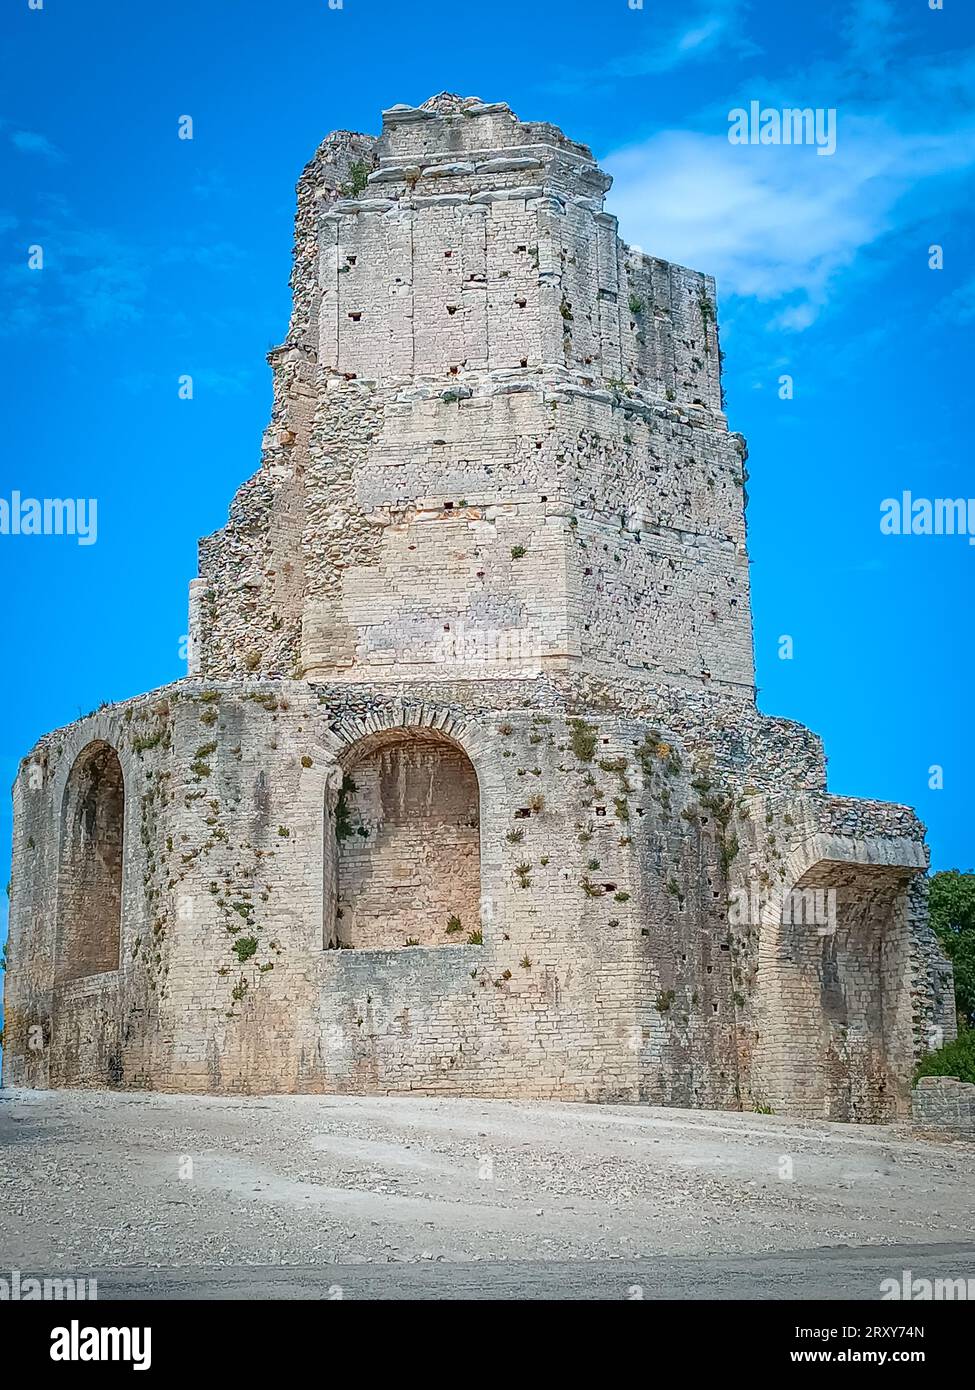 Tour Magne, Roman tower of Nîmes, France. Stock Photo